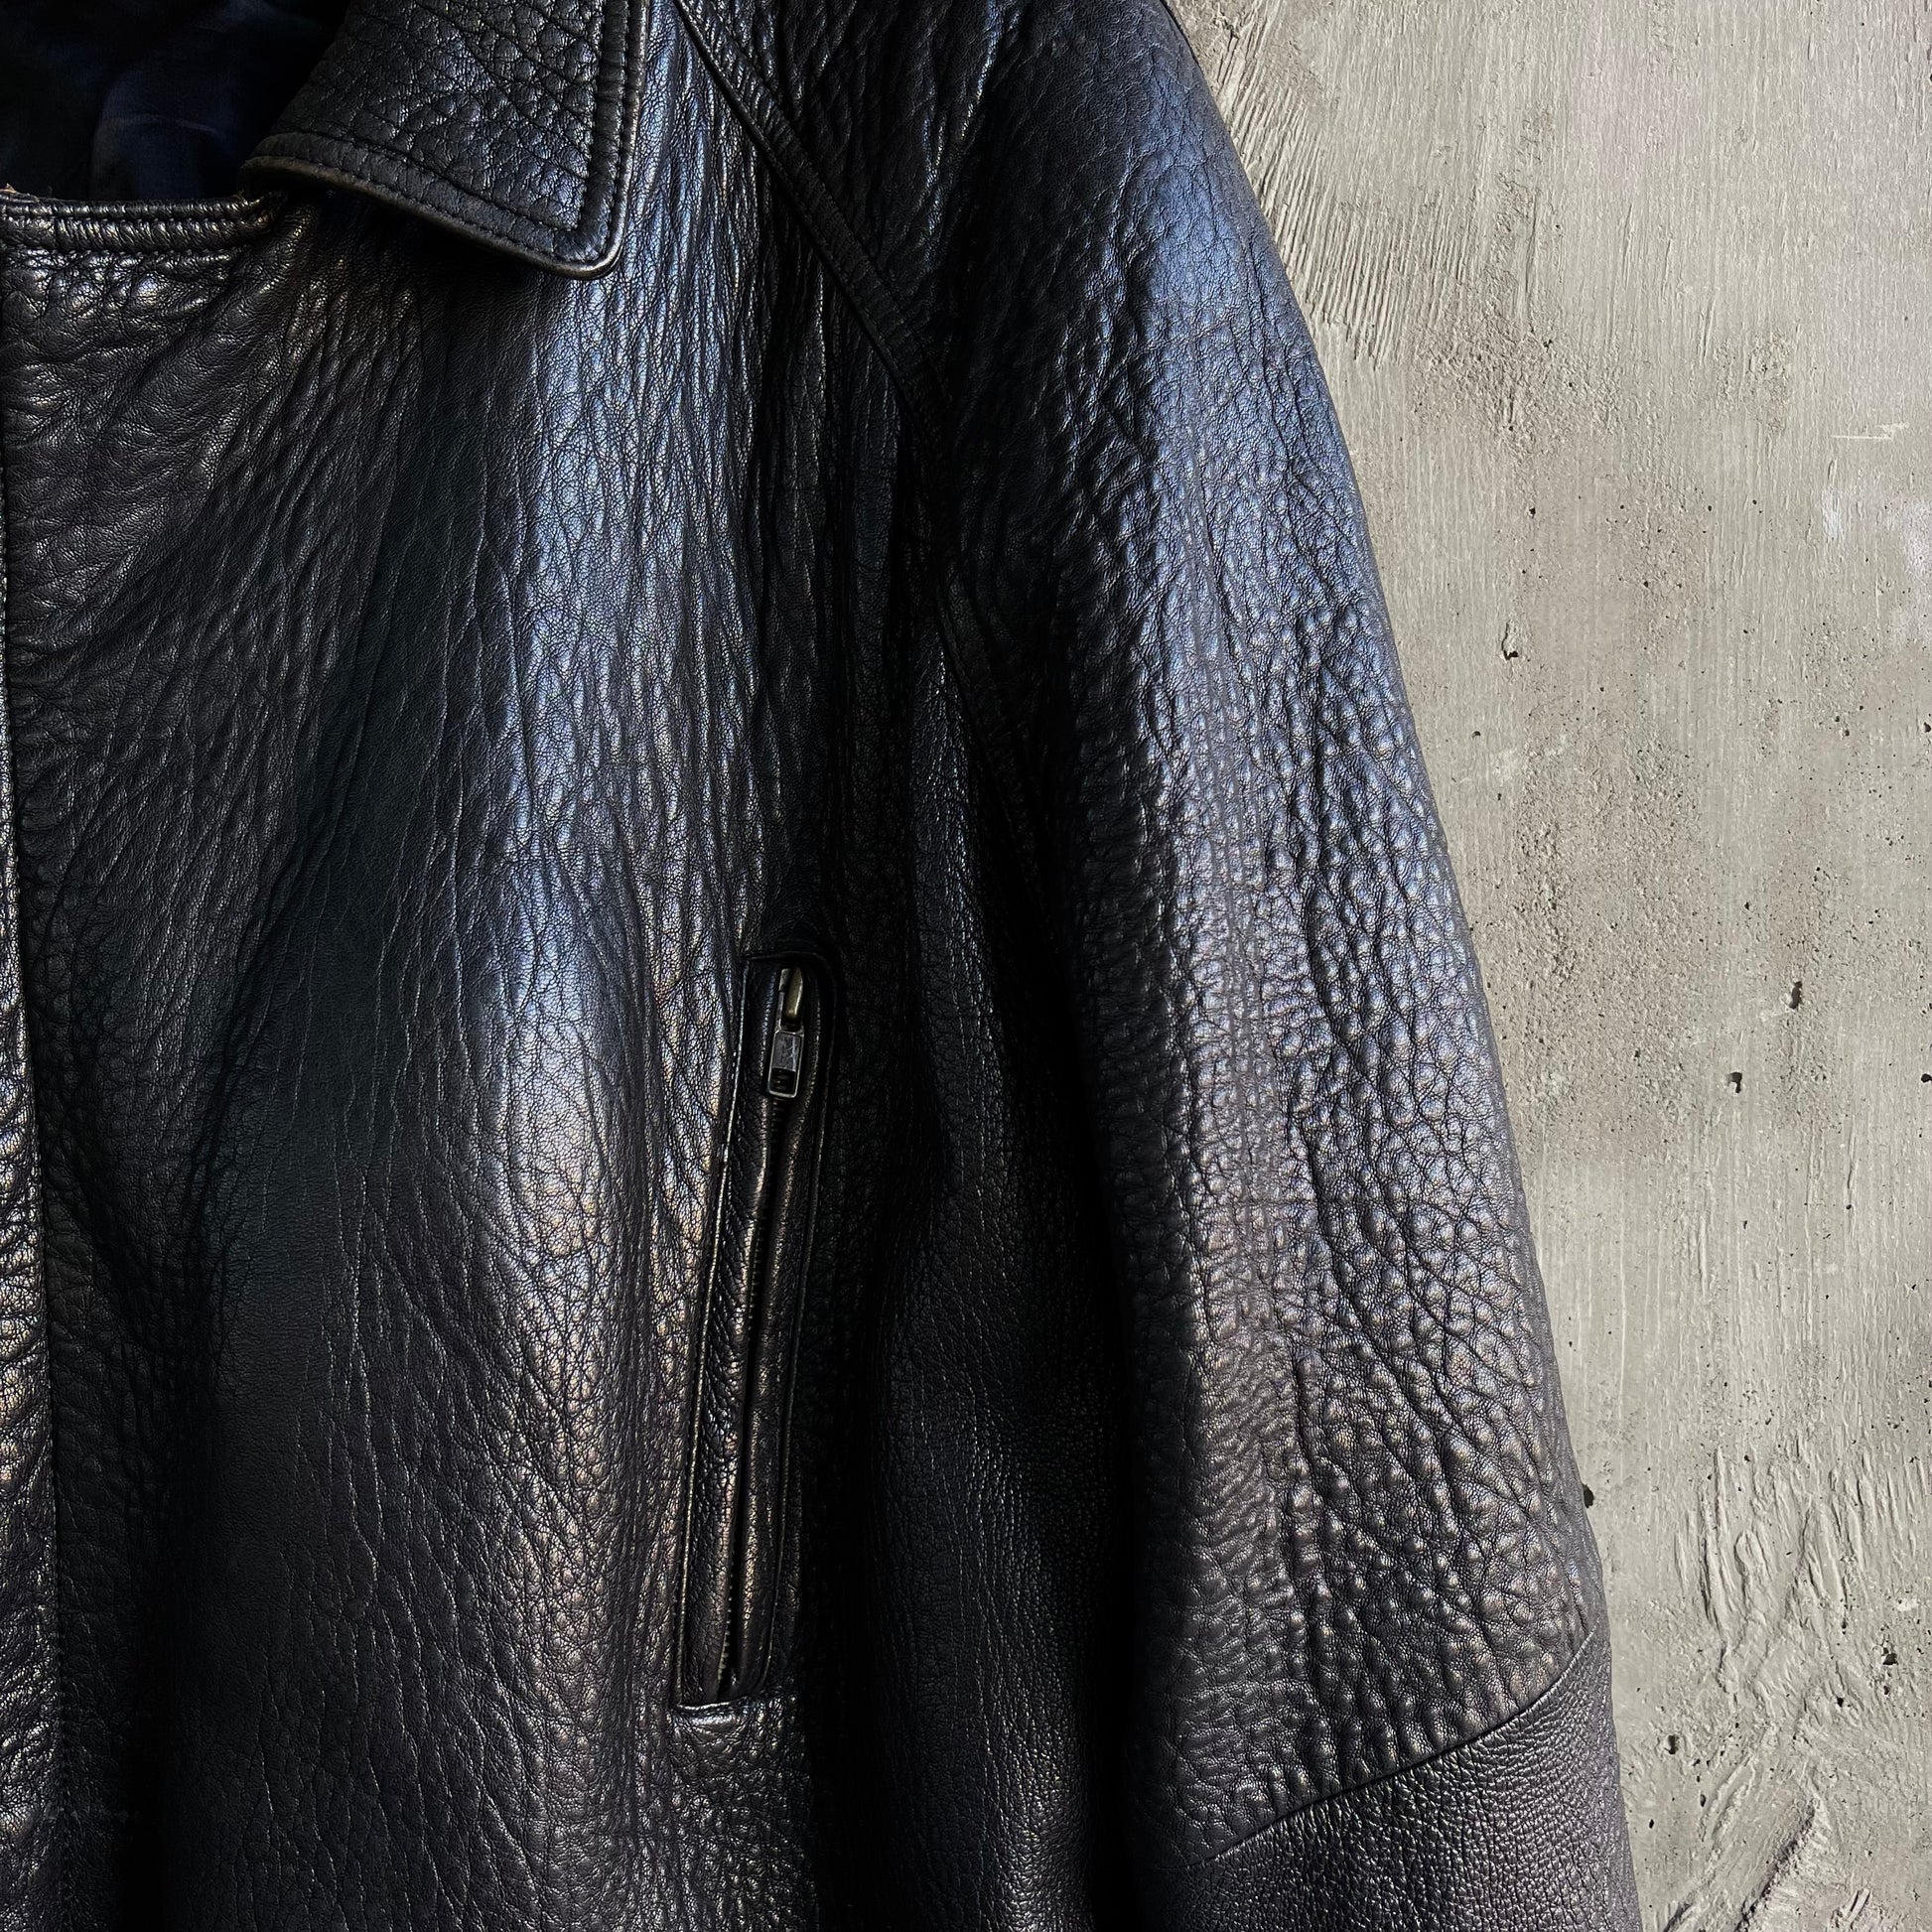 Vintage Tannery West Leather Jacket - SHOP EZRA